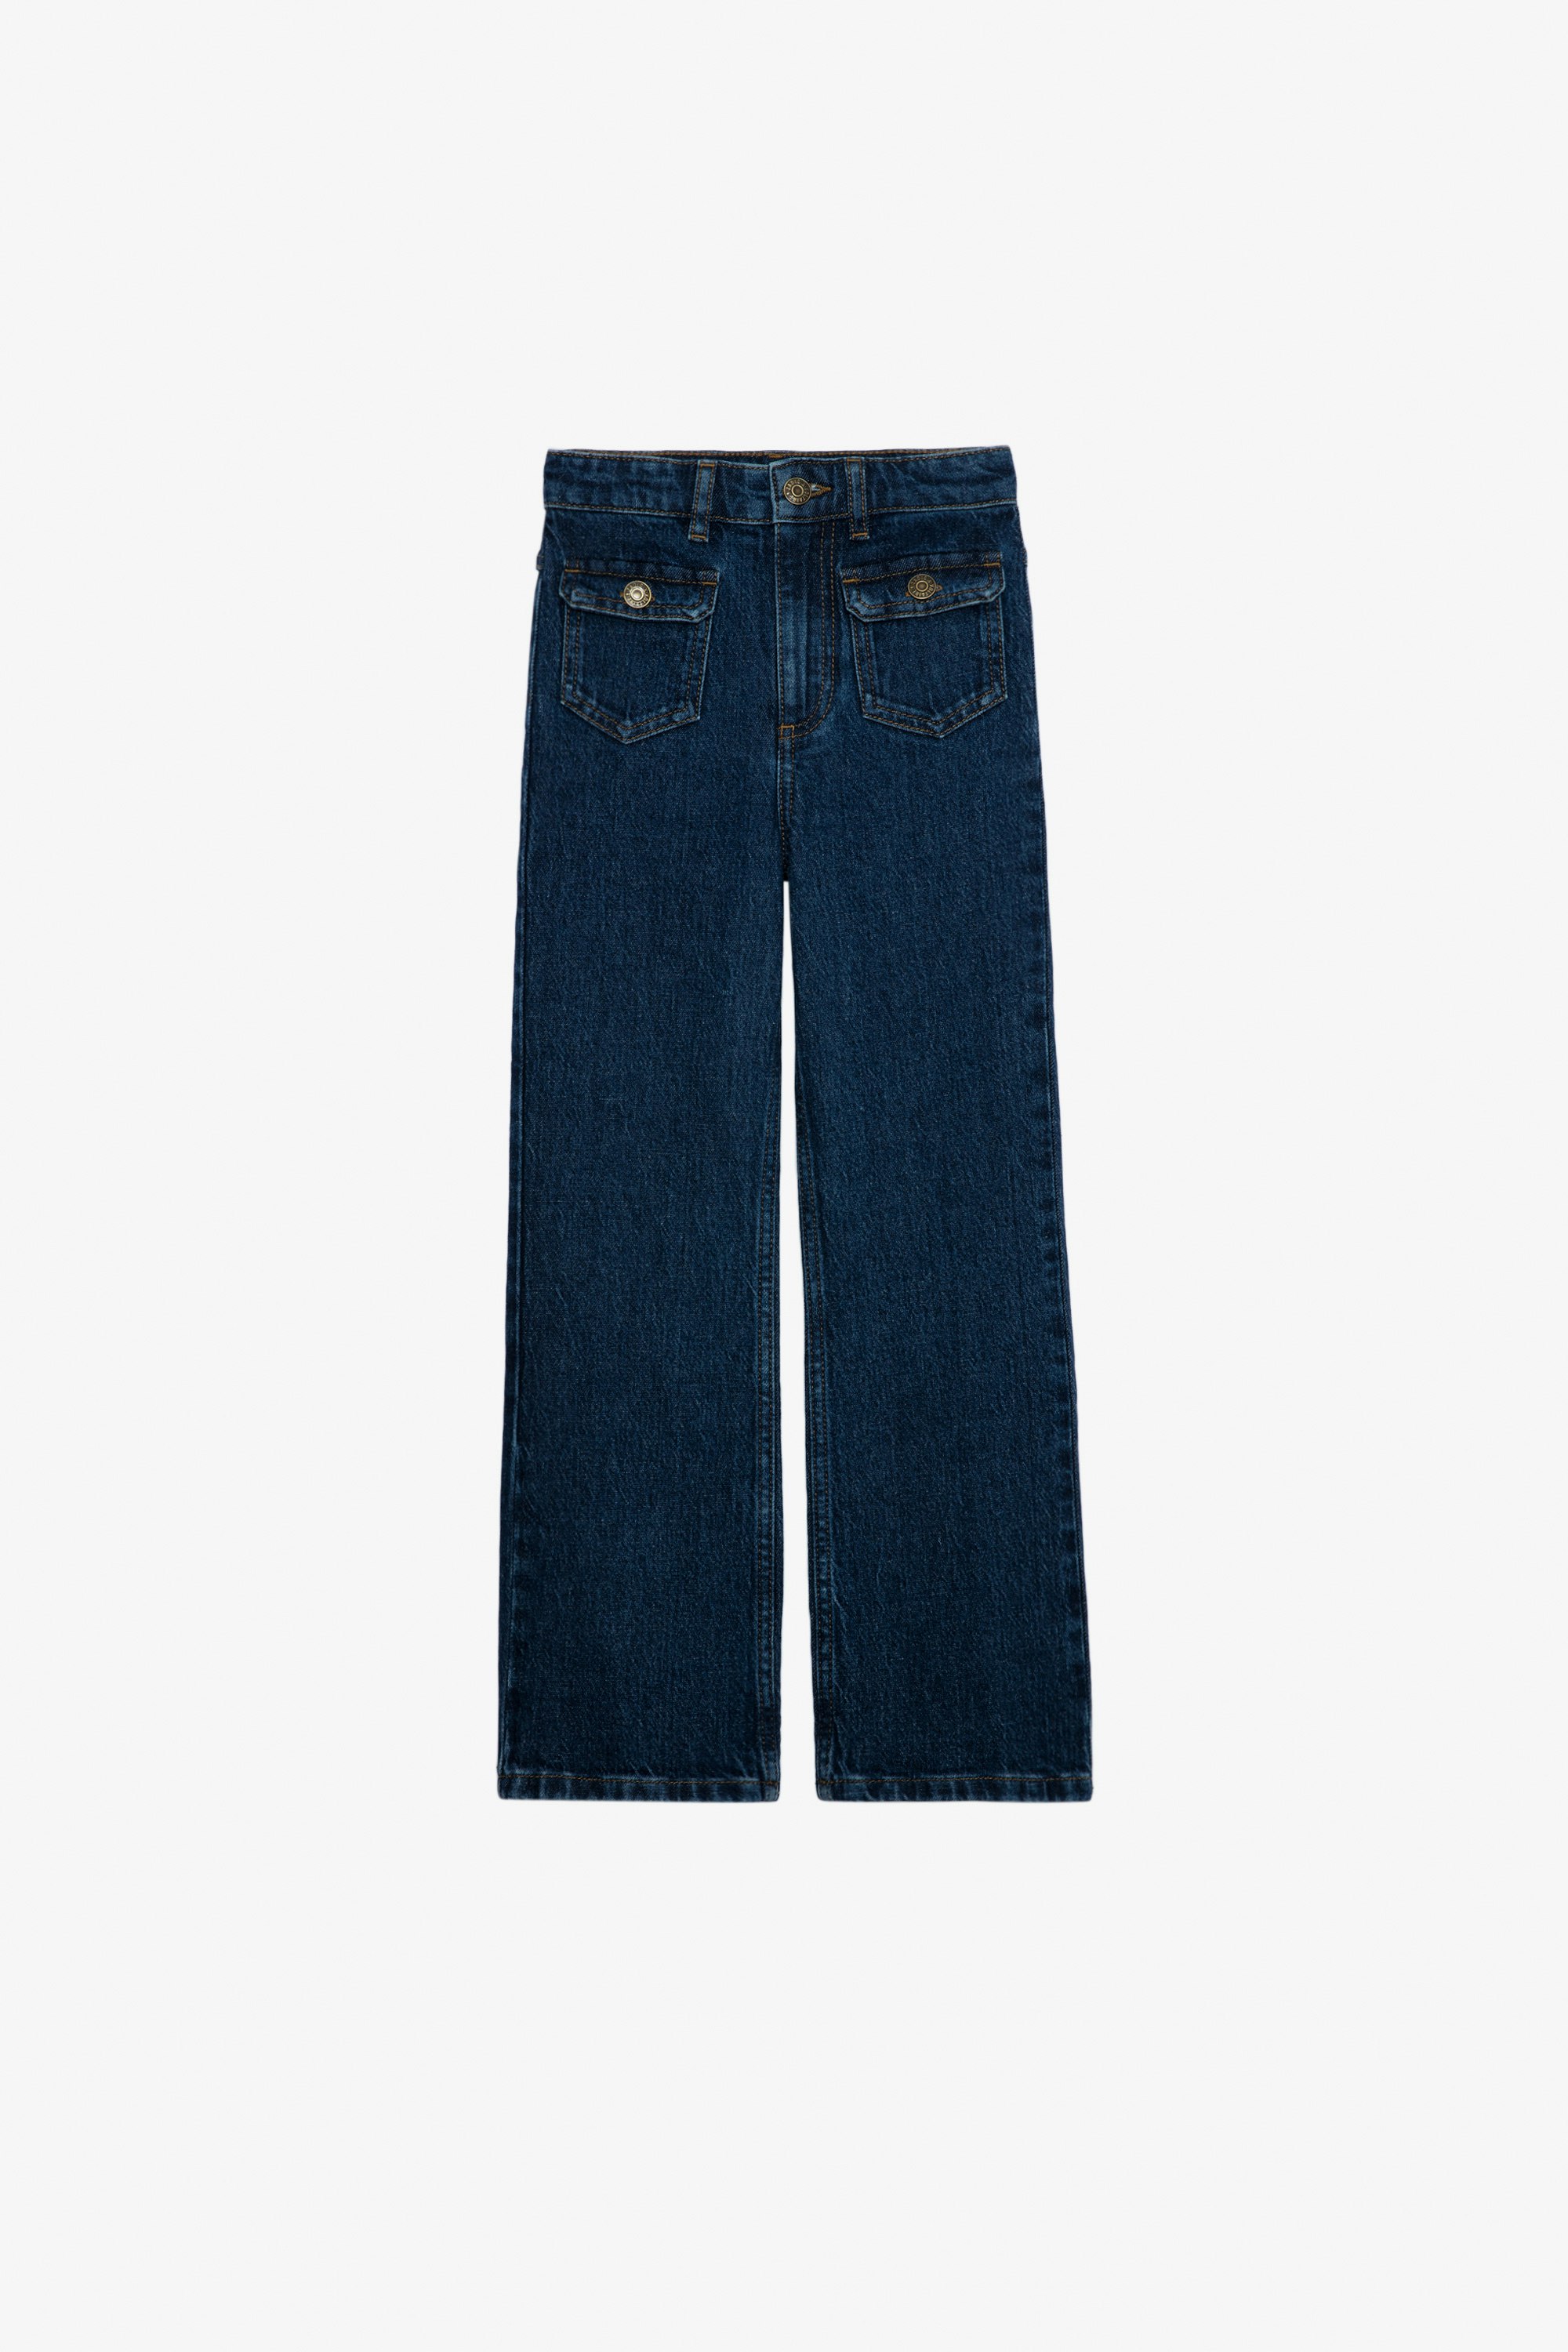 Hippie Girls’ Jeans - Girls’ raw denim flared jeans.